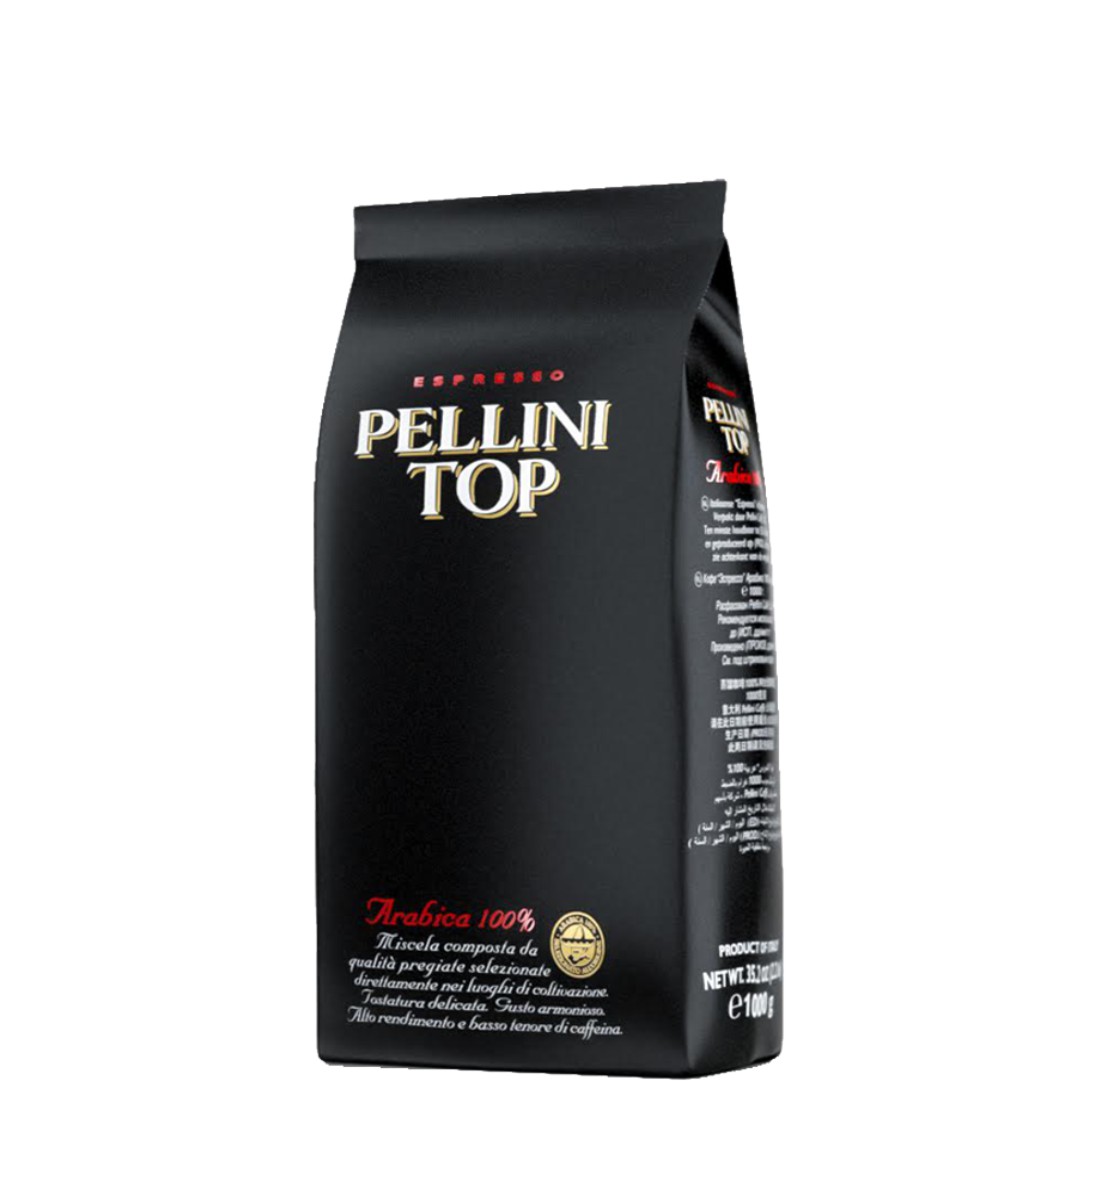 Pellini Top Arabica cafea boabe 1 kg